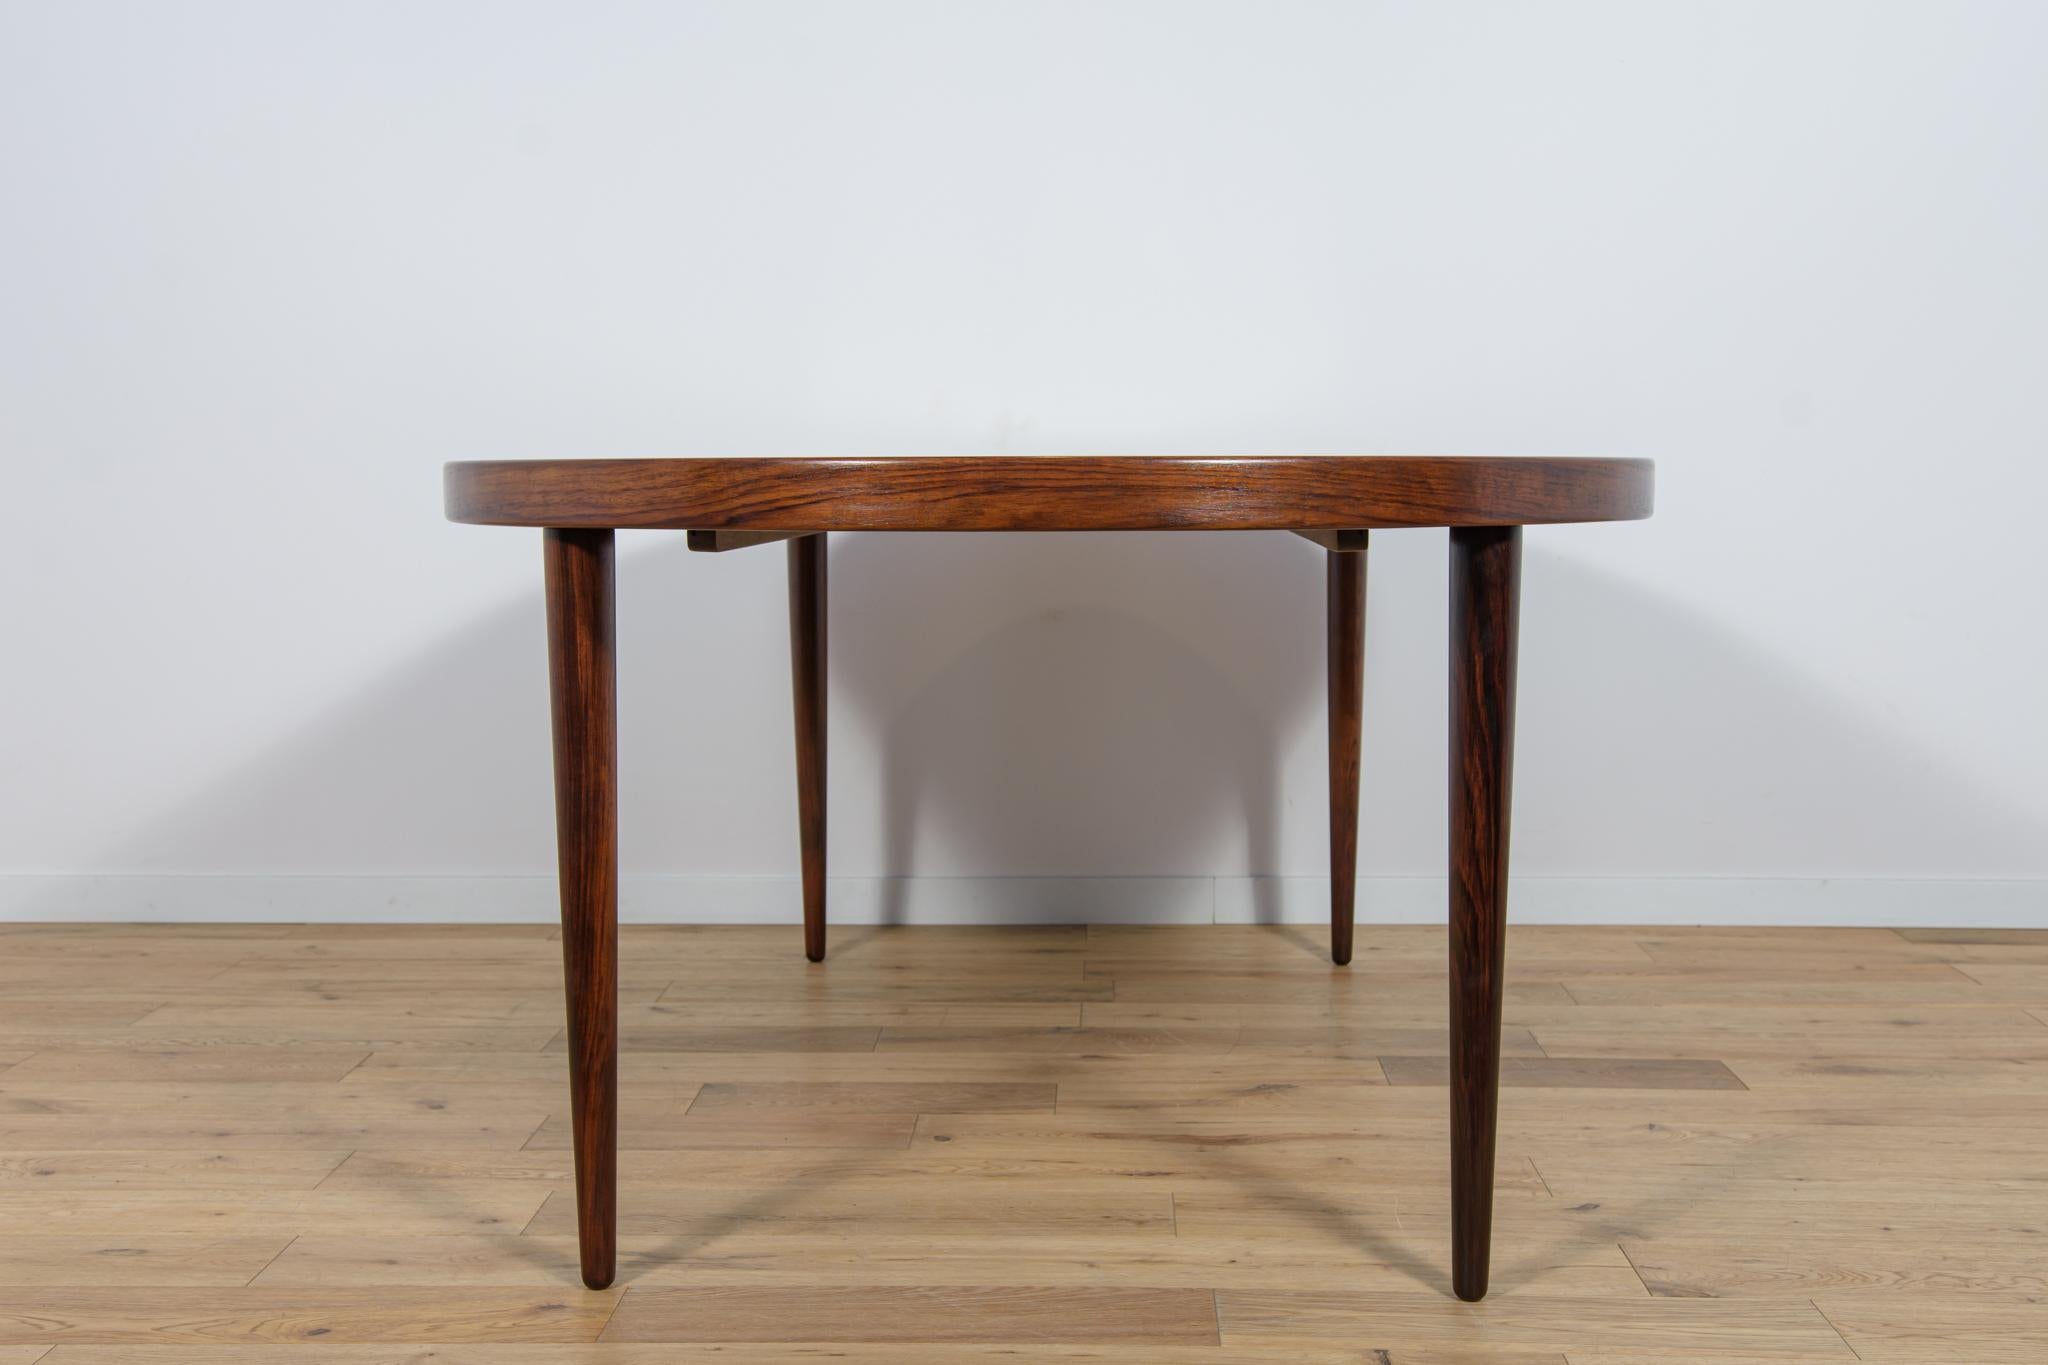  Mid-Century Extendable Rosewood Dining Table by Kai Kristiansen for Feldballes  For Sale 6